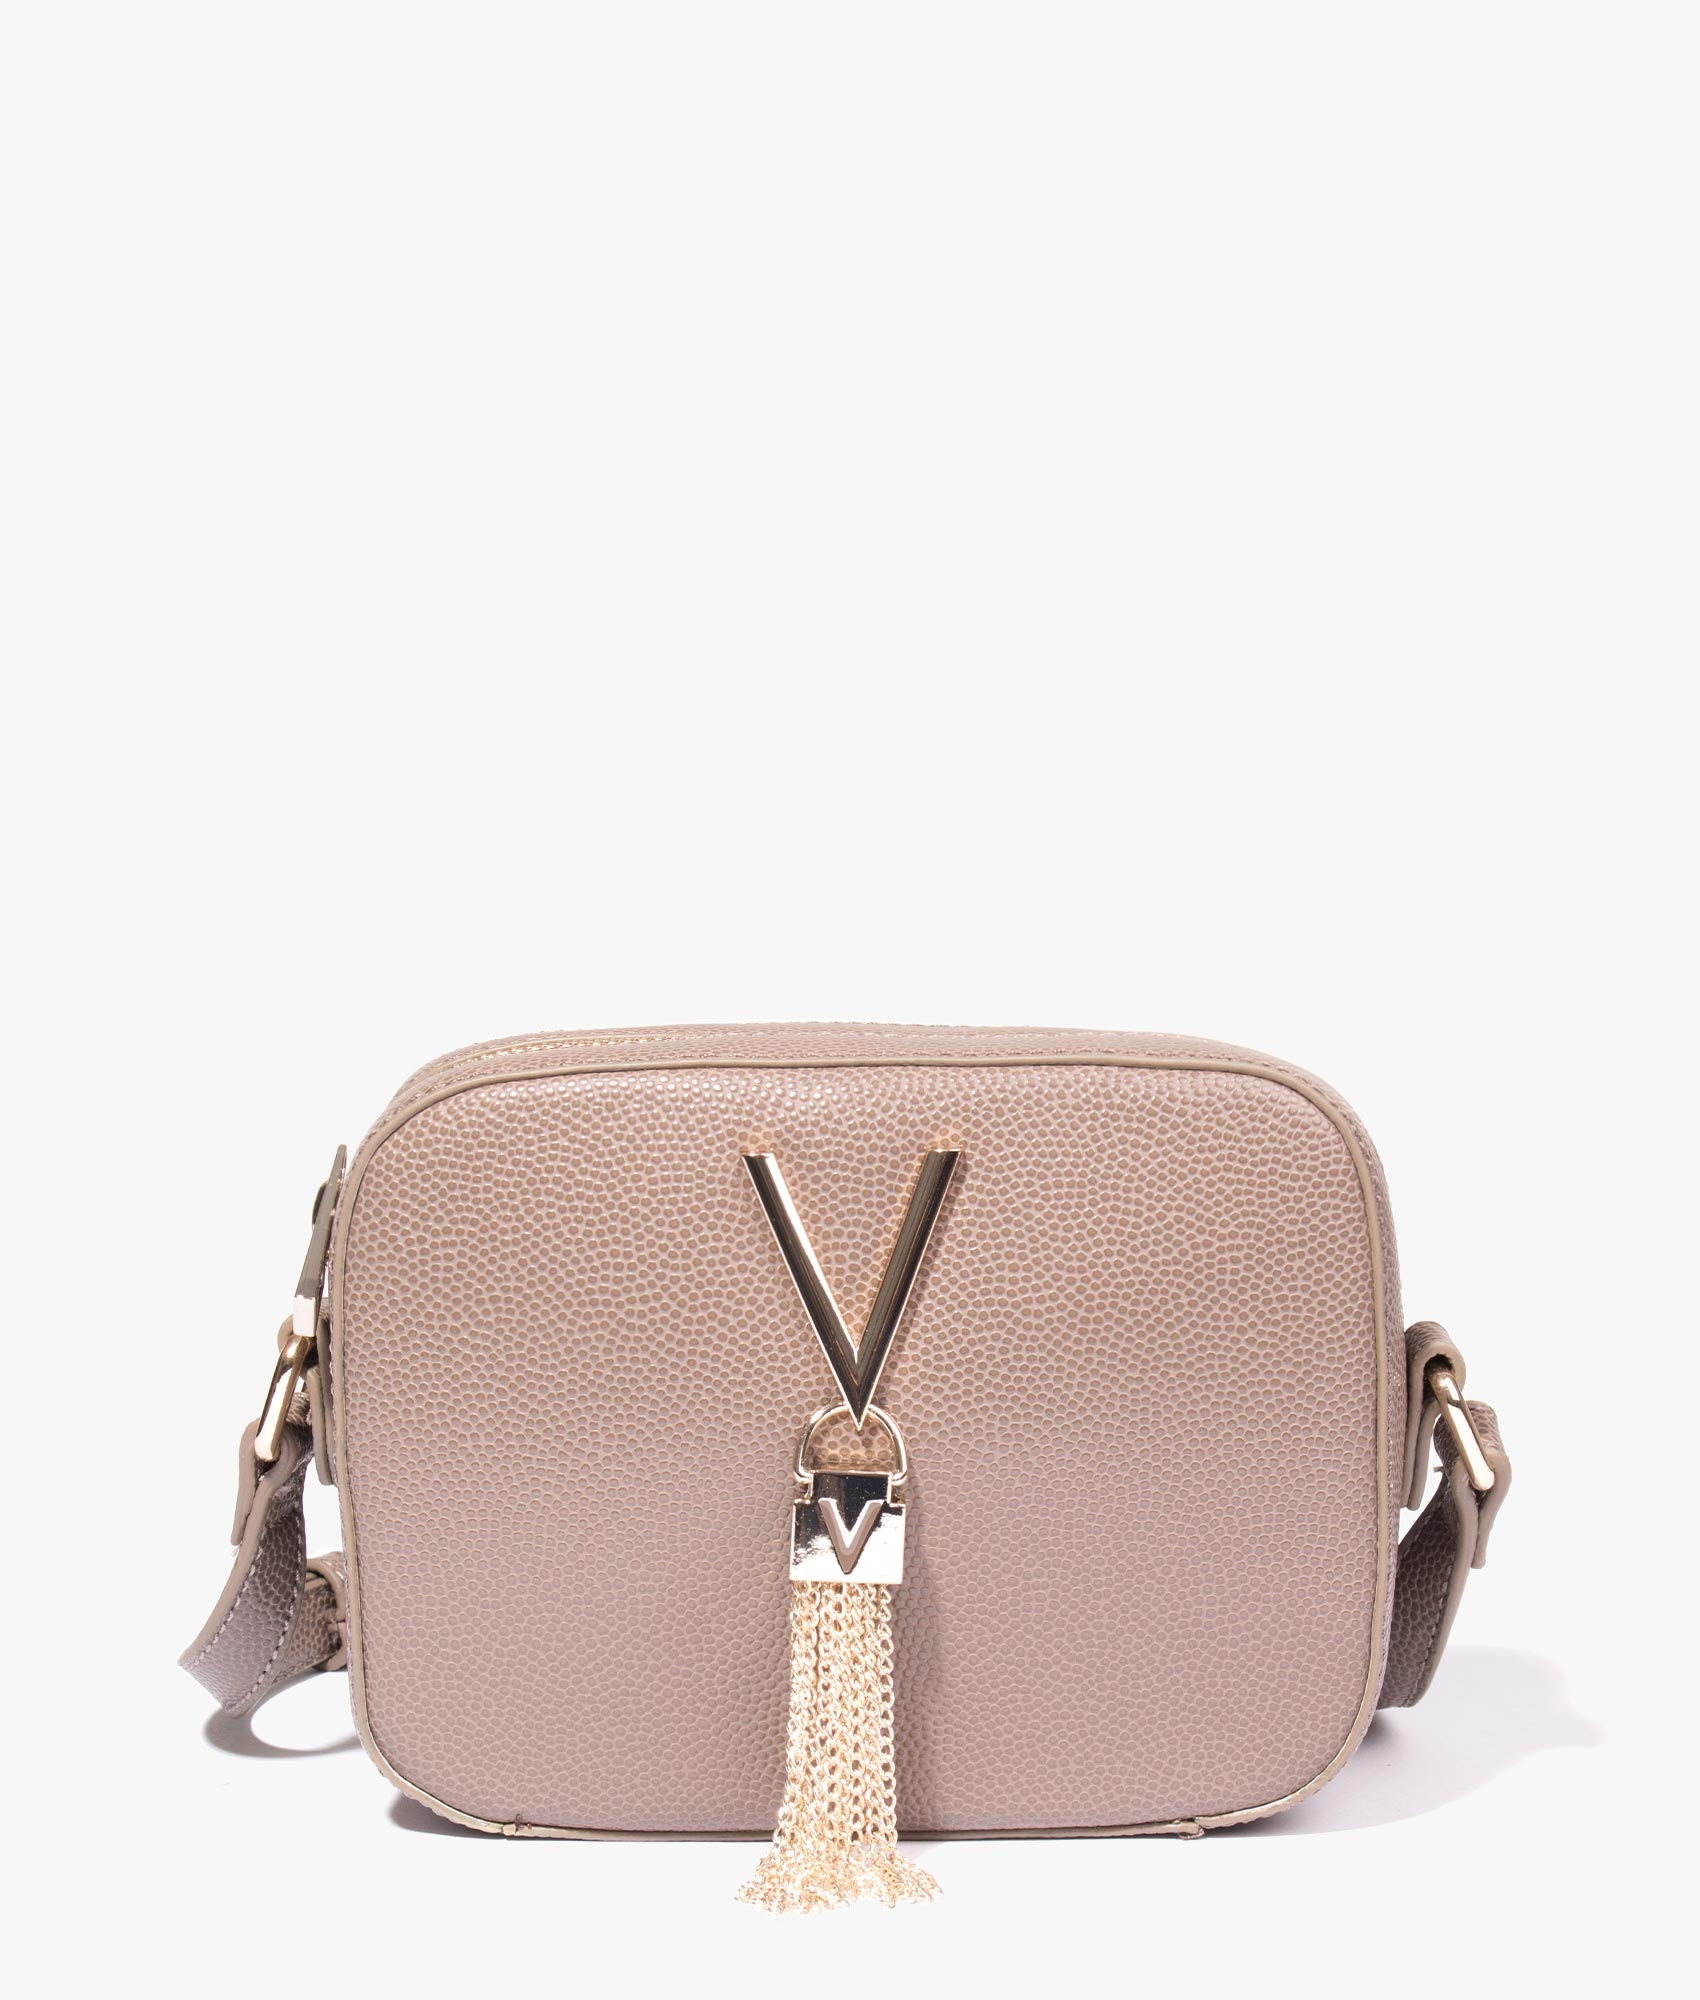 Valentino bags | Divina camera bag in taupe | EQVVS Womens